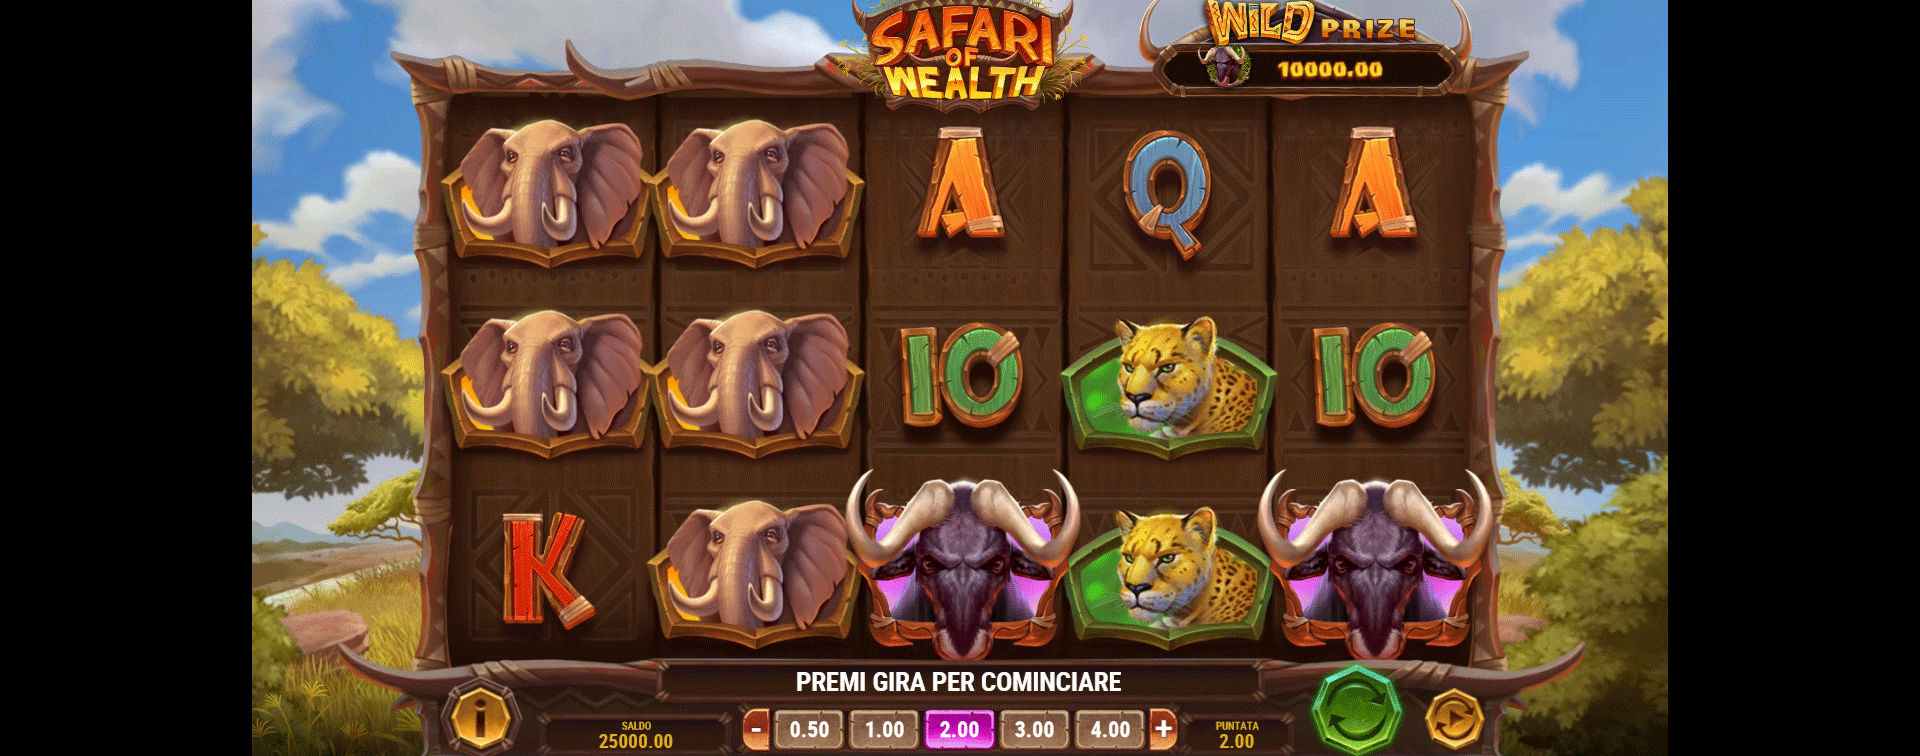 schermata slot machine safari of wealth